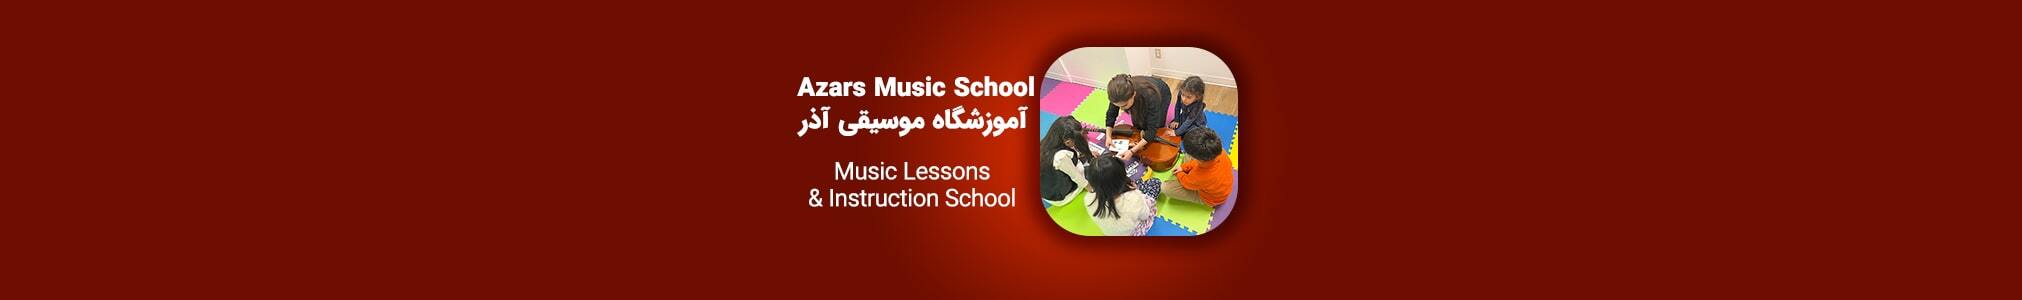 Azars Music School